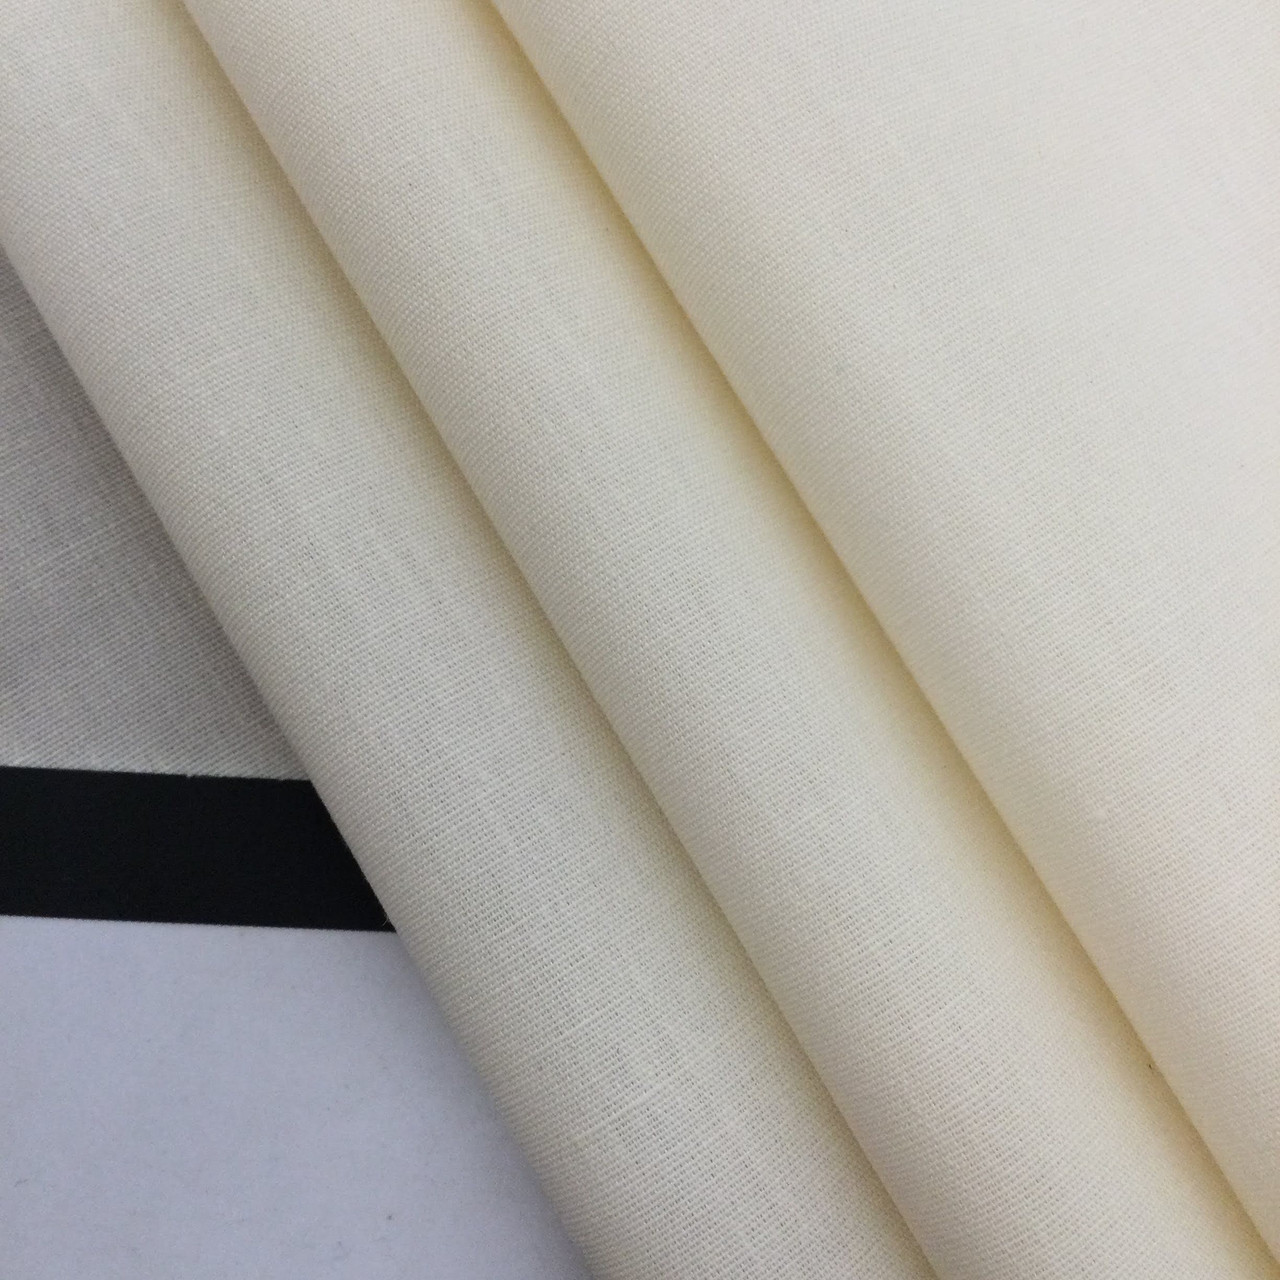 POLAS Traditional Sleeve Lining Fabric, 57 Wide